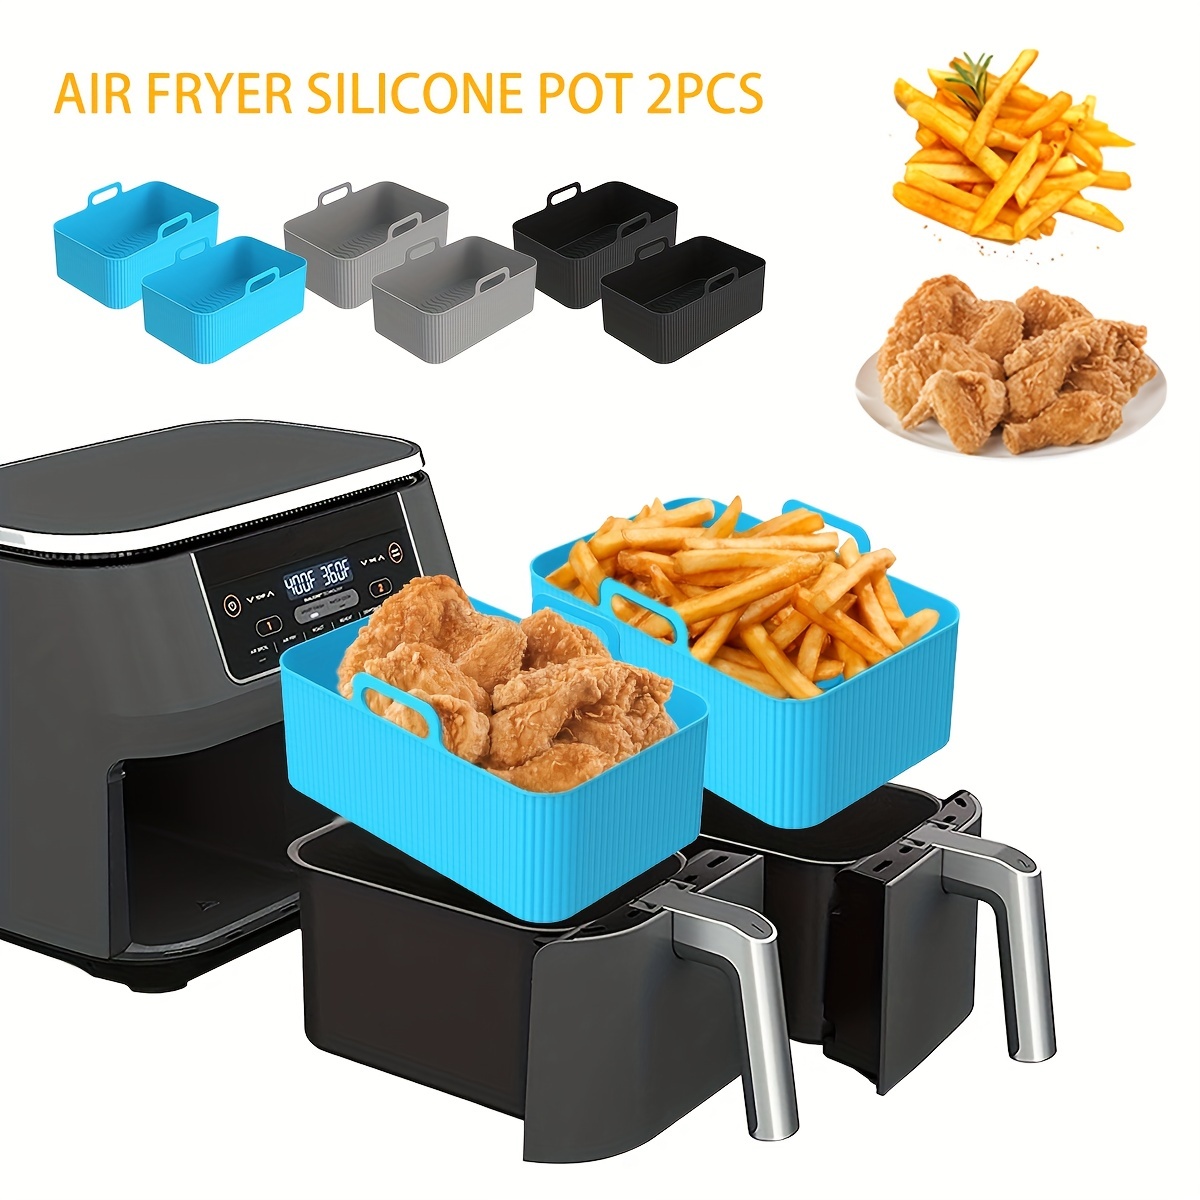 Silicone Air Fryer Basket Liners Square - 2Pcs Reusable Air Fryer Silicone  Pots